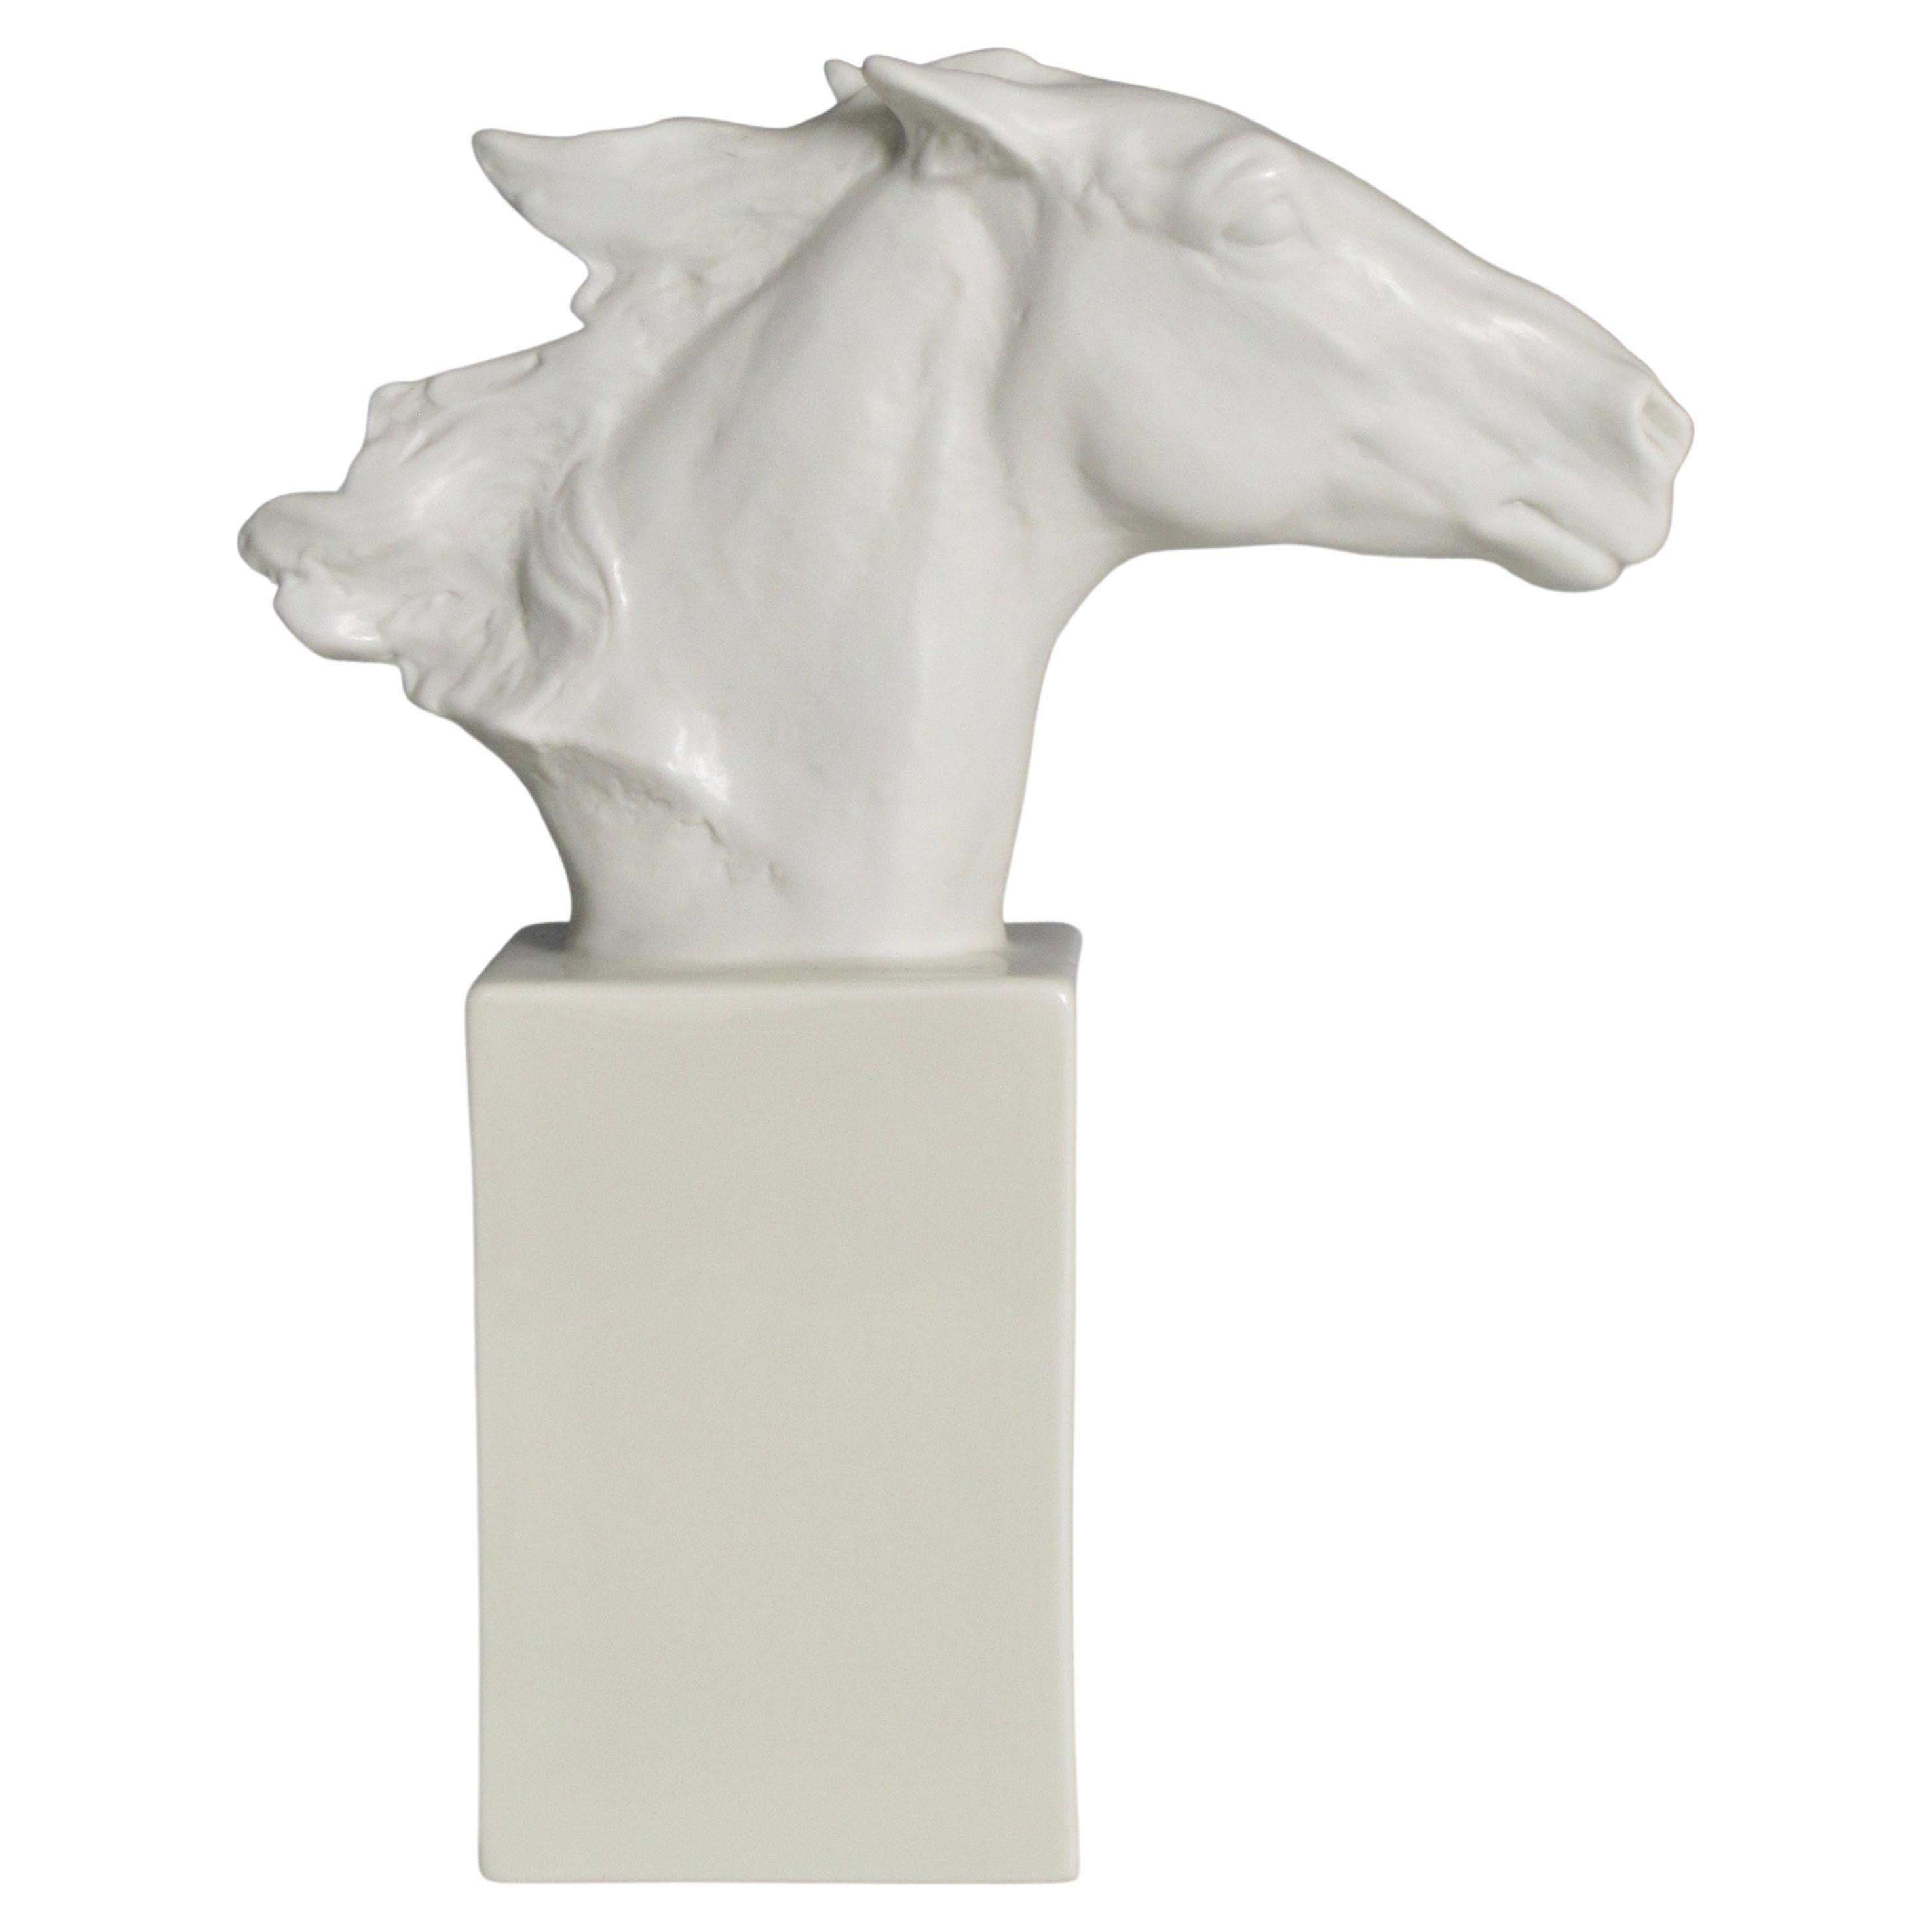 Rosenthal "Hannibal" Horse Head Bust by Albert Hussman For Sale